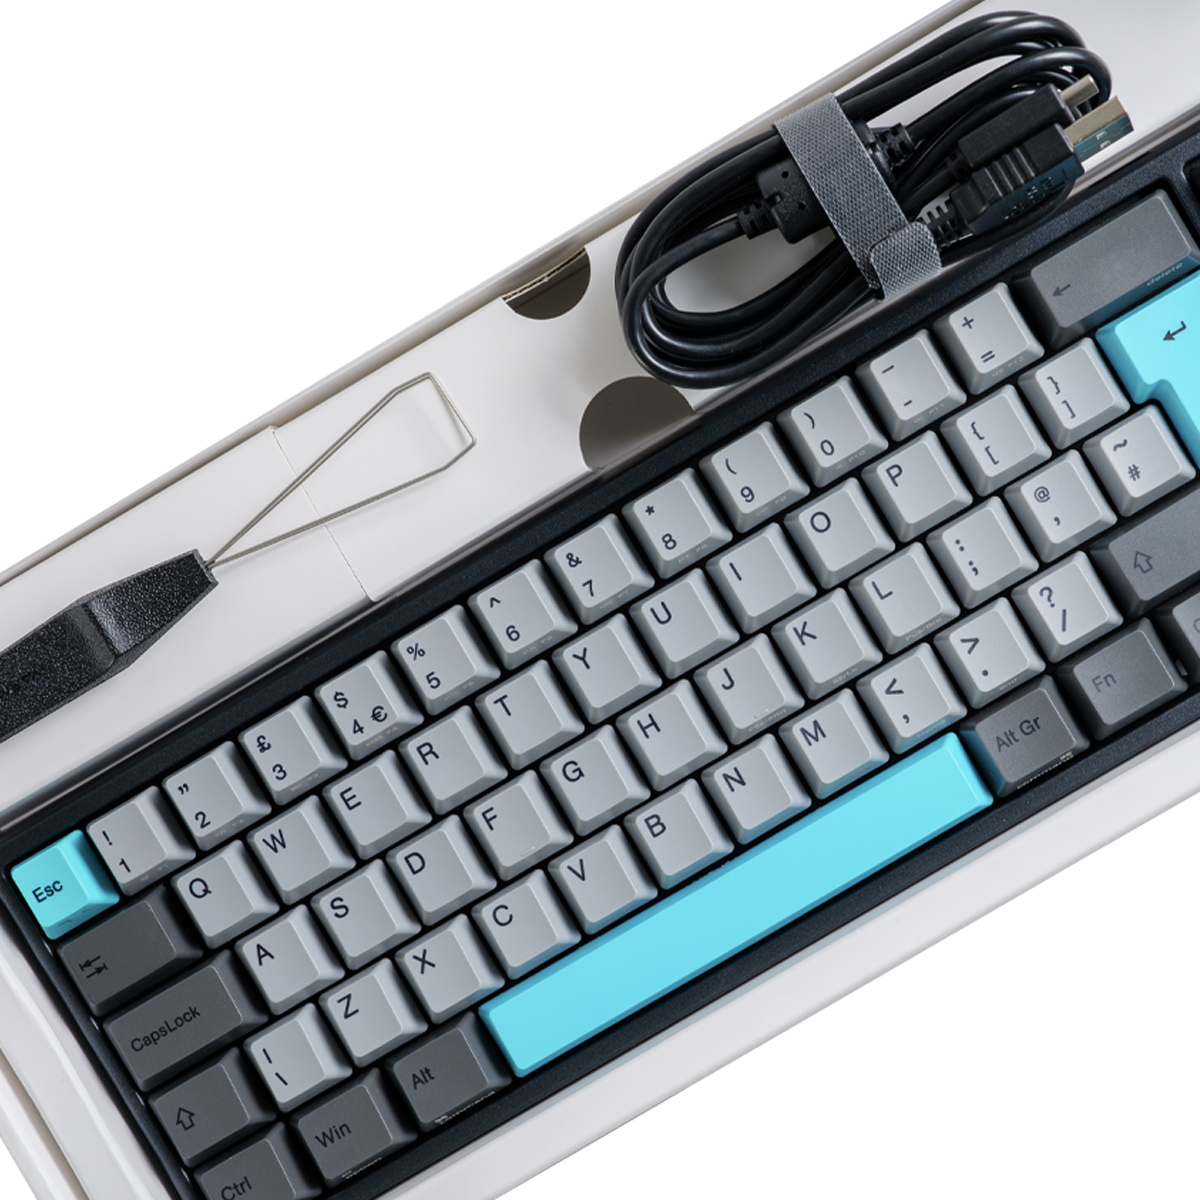 Ducky - Ducky x Varmilo MIYA 69 Pro Moonlight 65% Cherry MX Brown Switch Gaming Keyboard